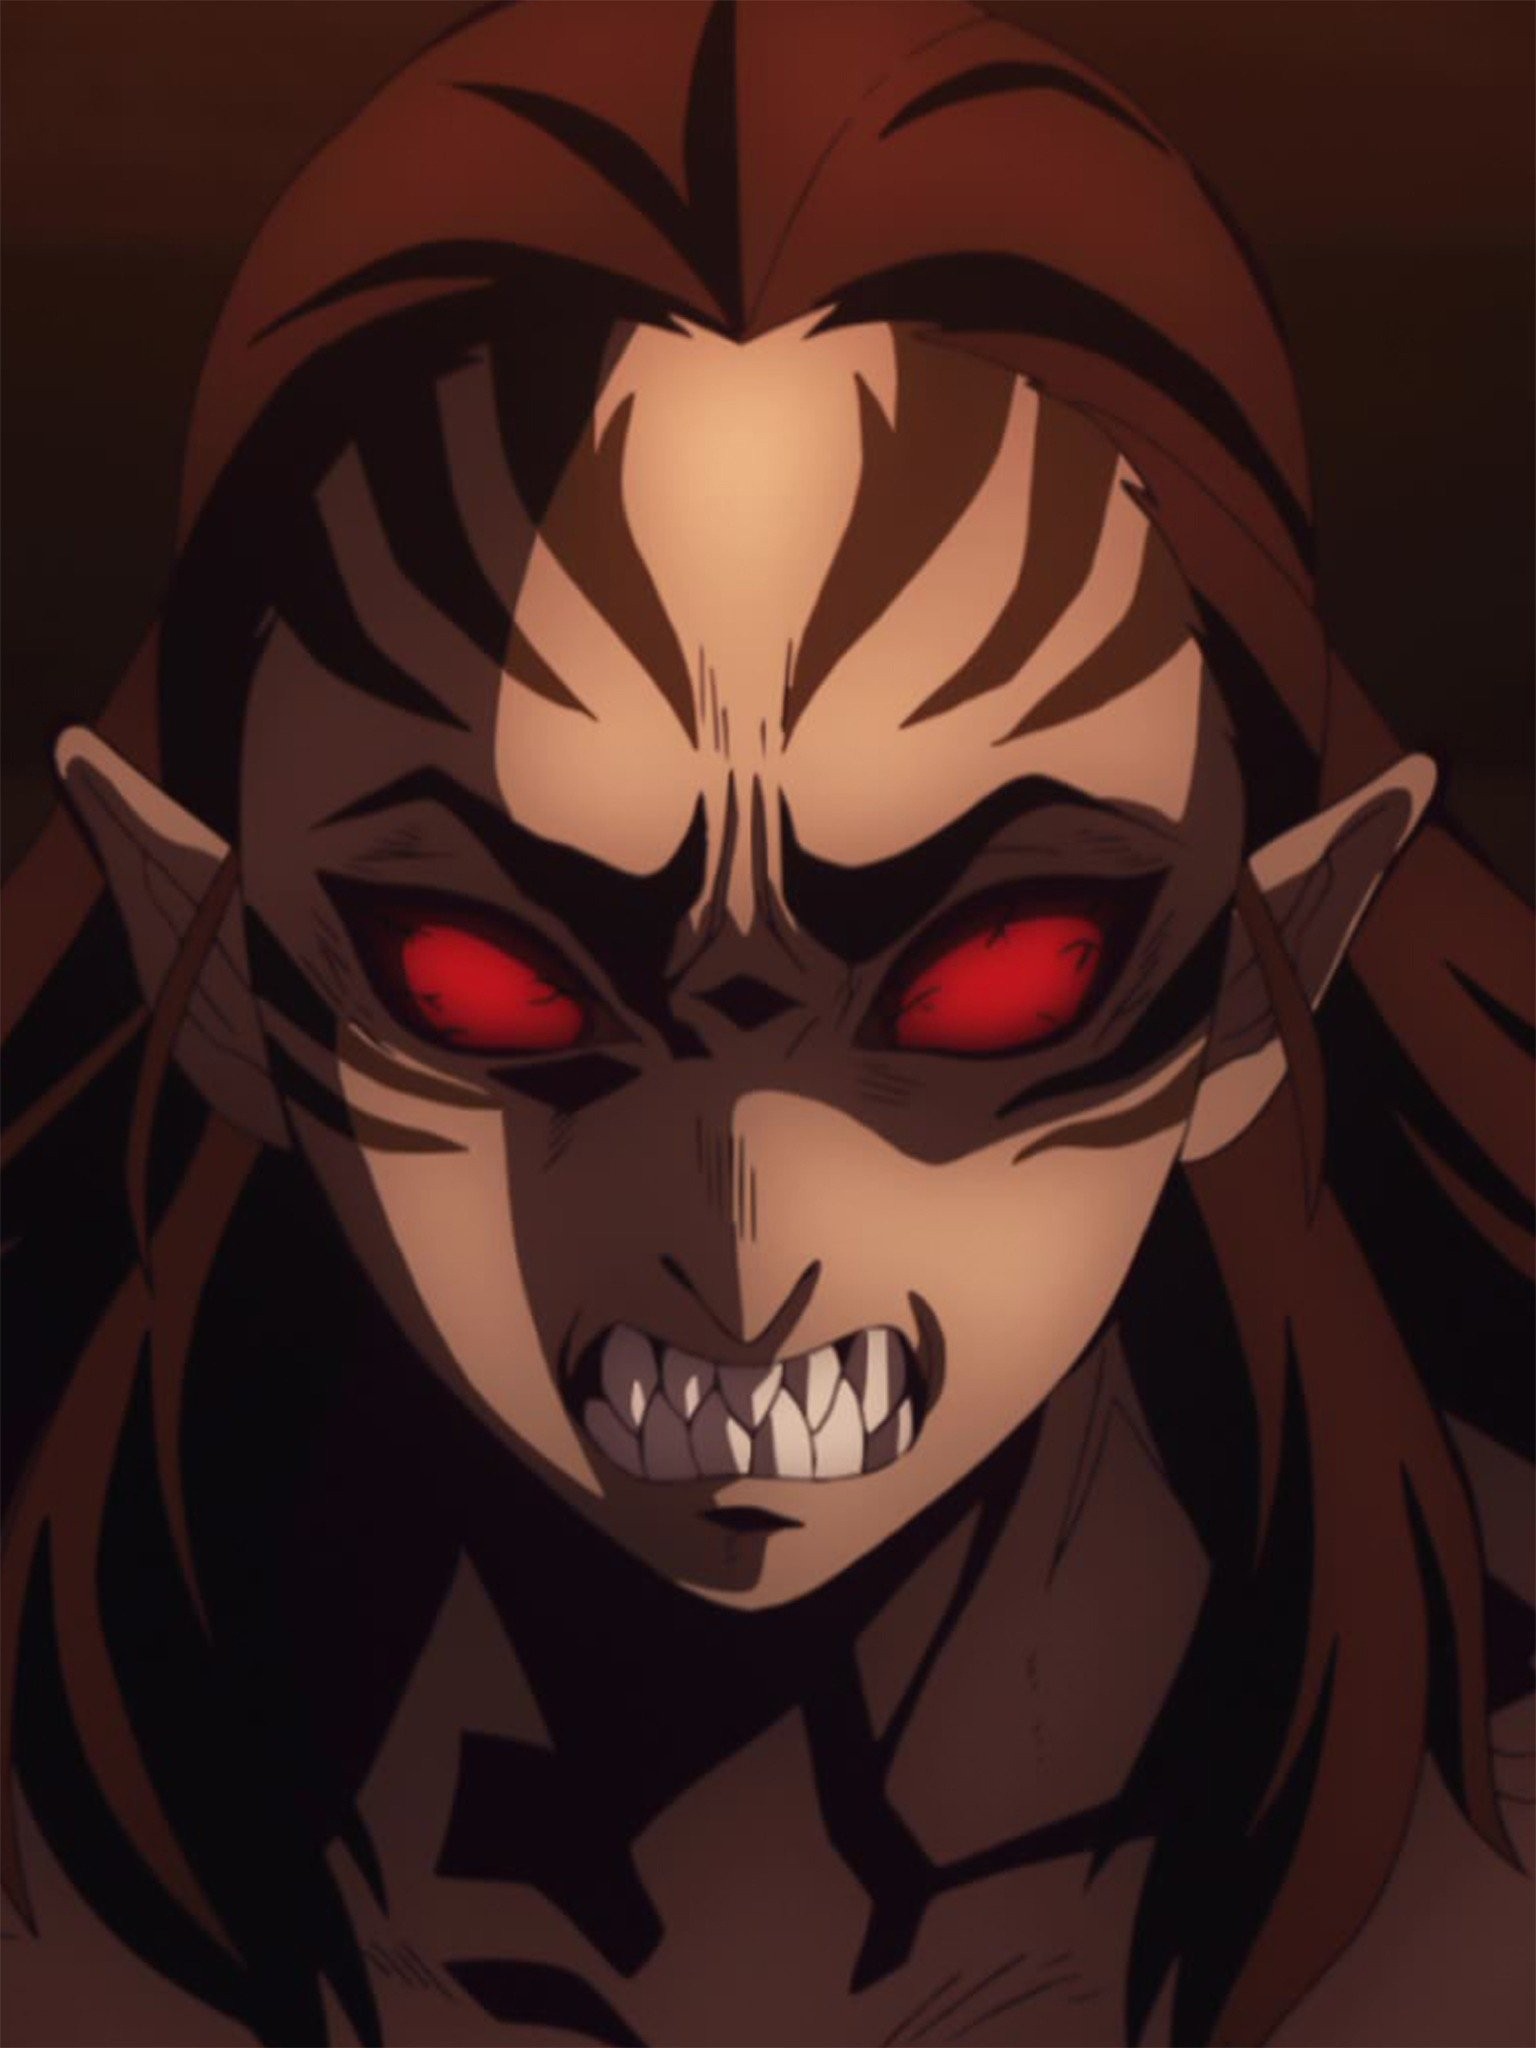 Never Give Up - Demon Slayer: Kimetsu no Yaiba Episode 17 Anime